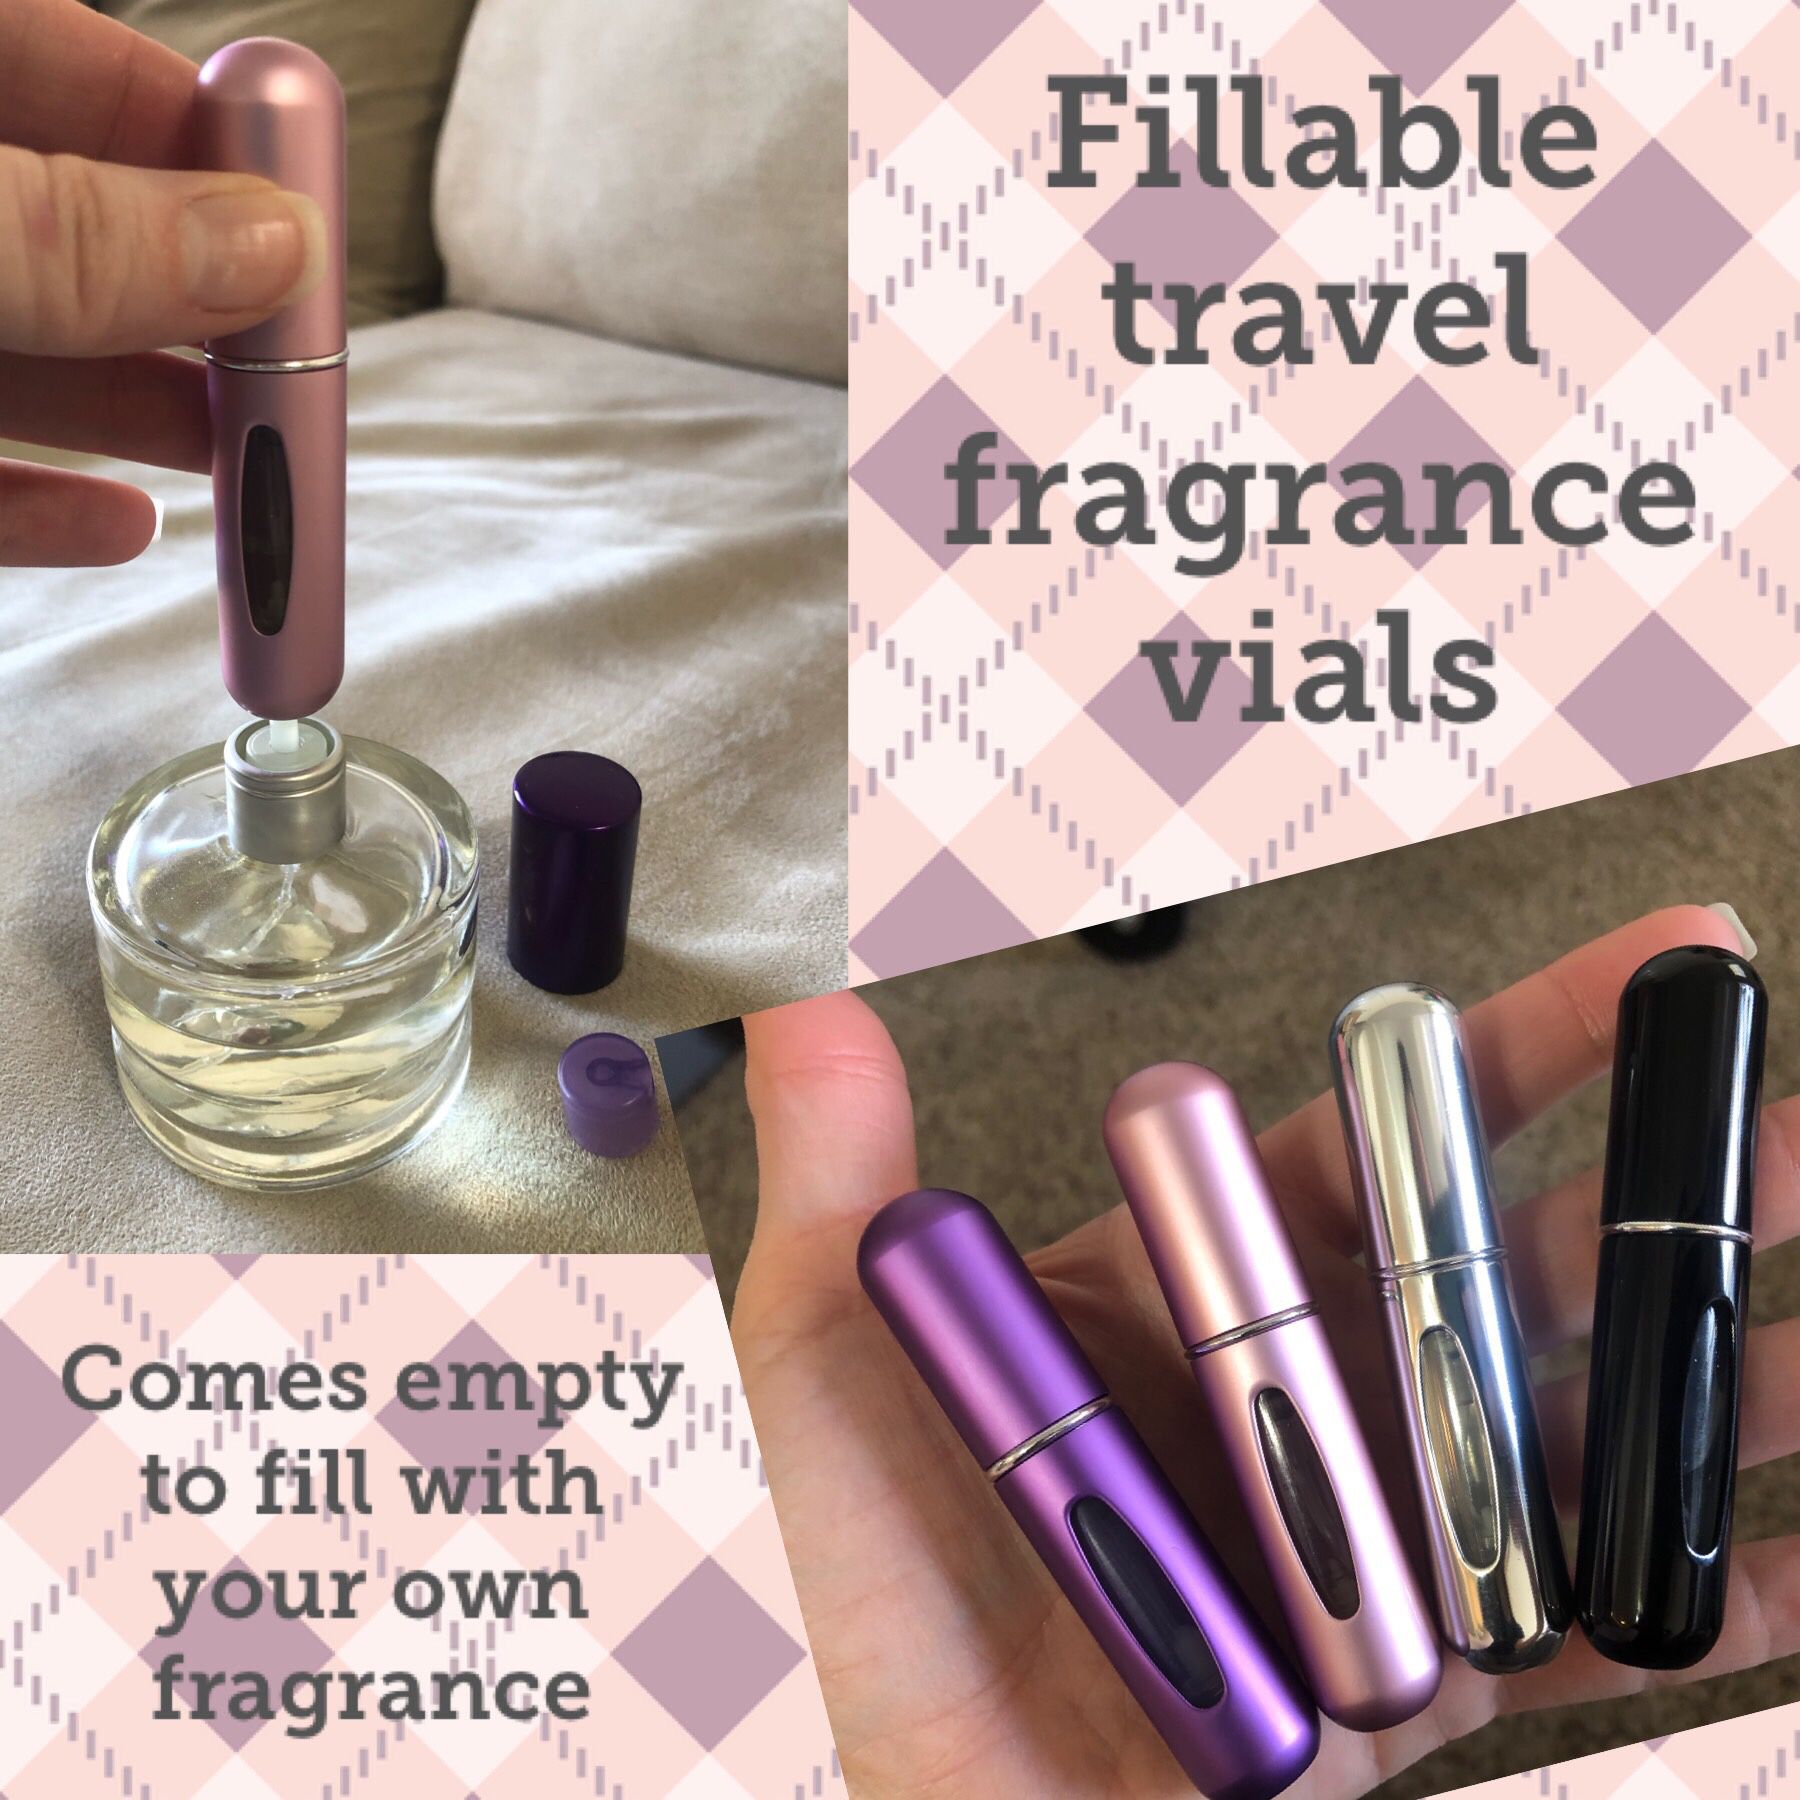 Fillable travel fragrance vials